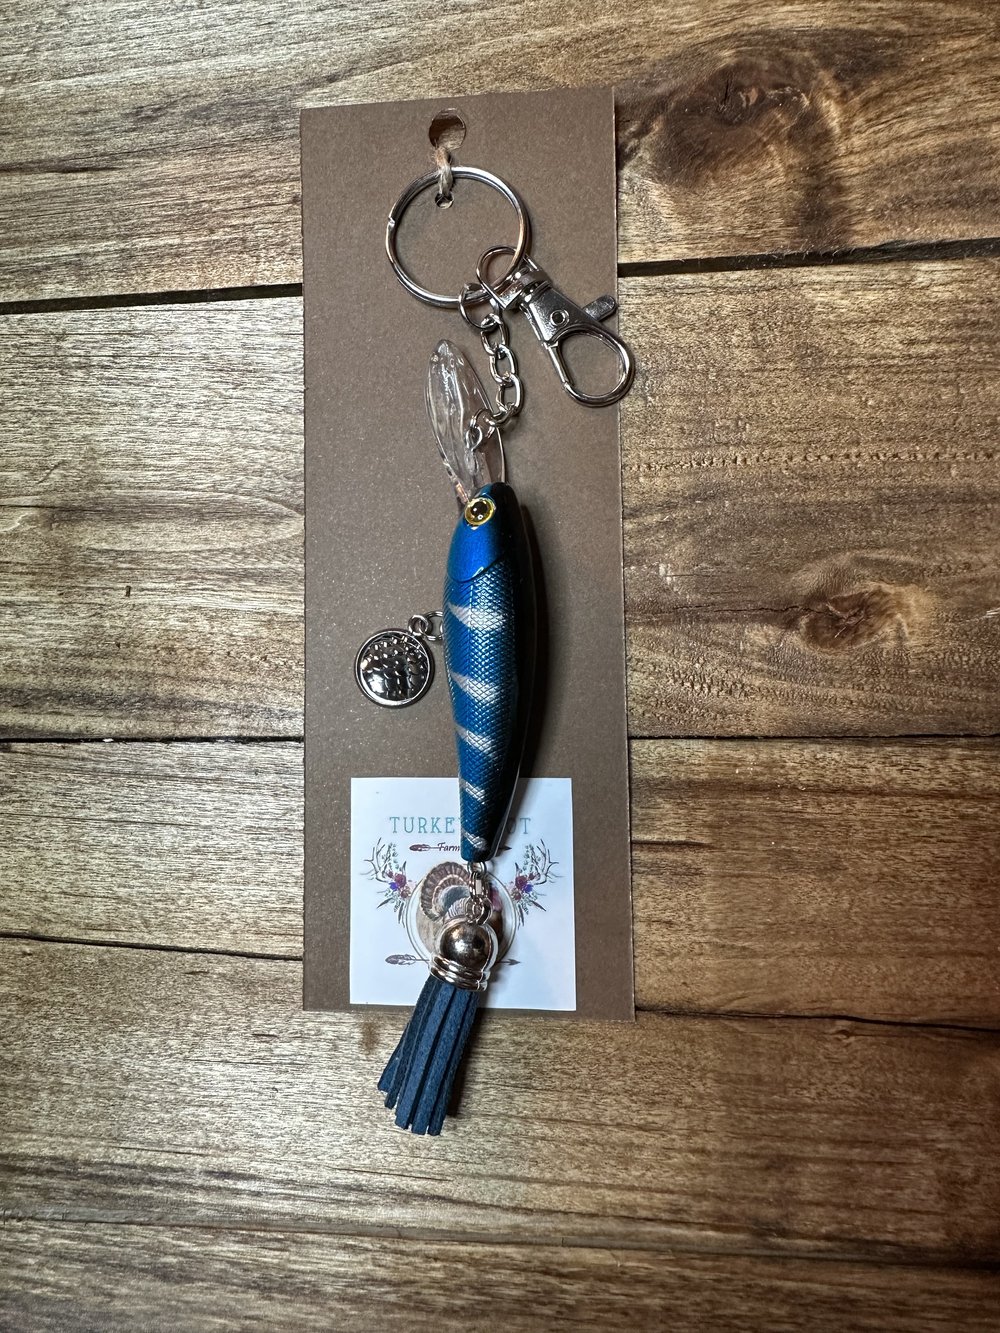 Fishing Lure Keychain #23 — Turkey Trot Farm & Shop LLC